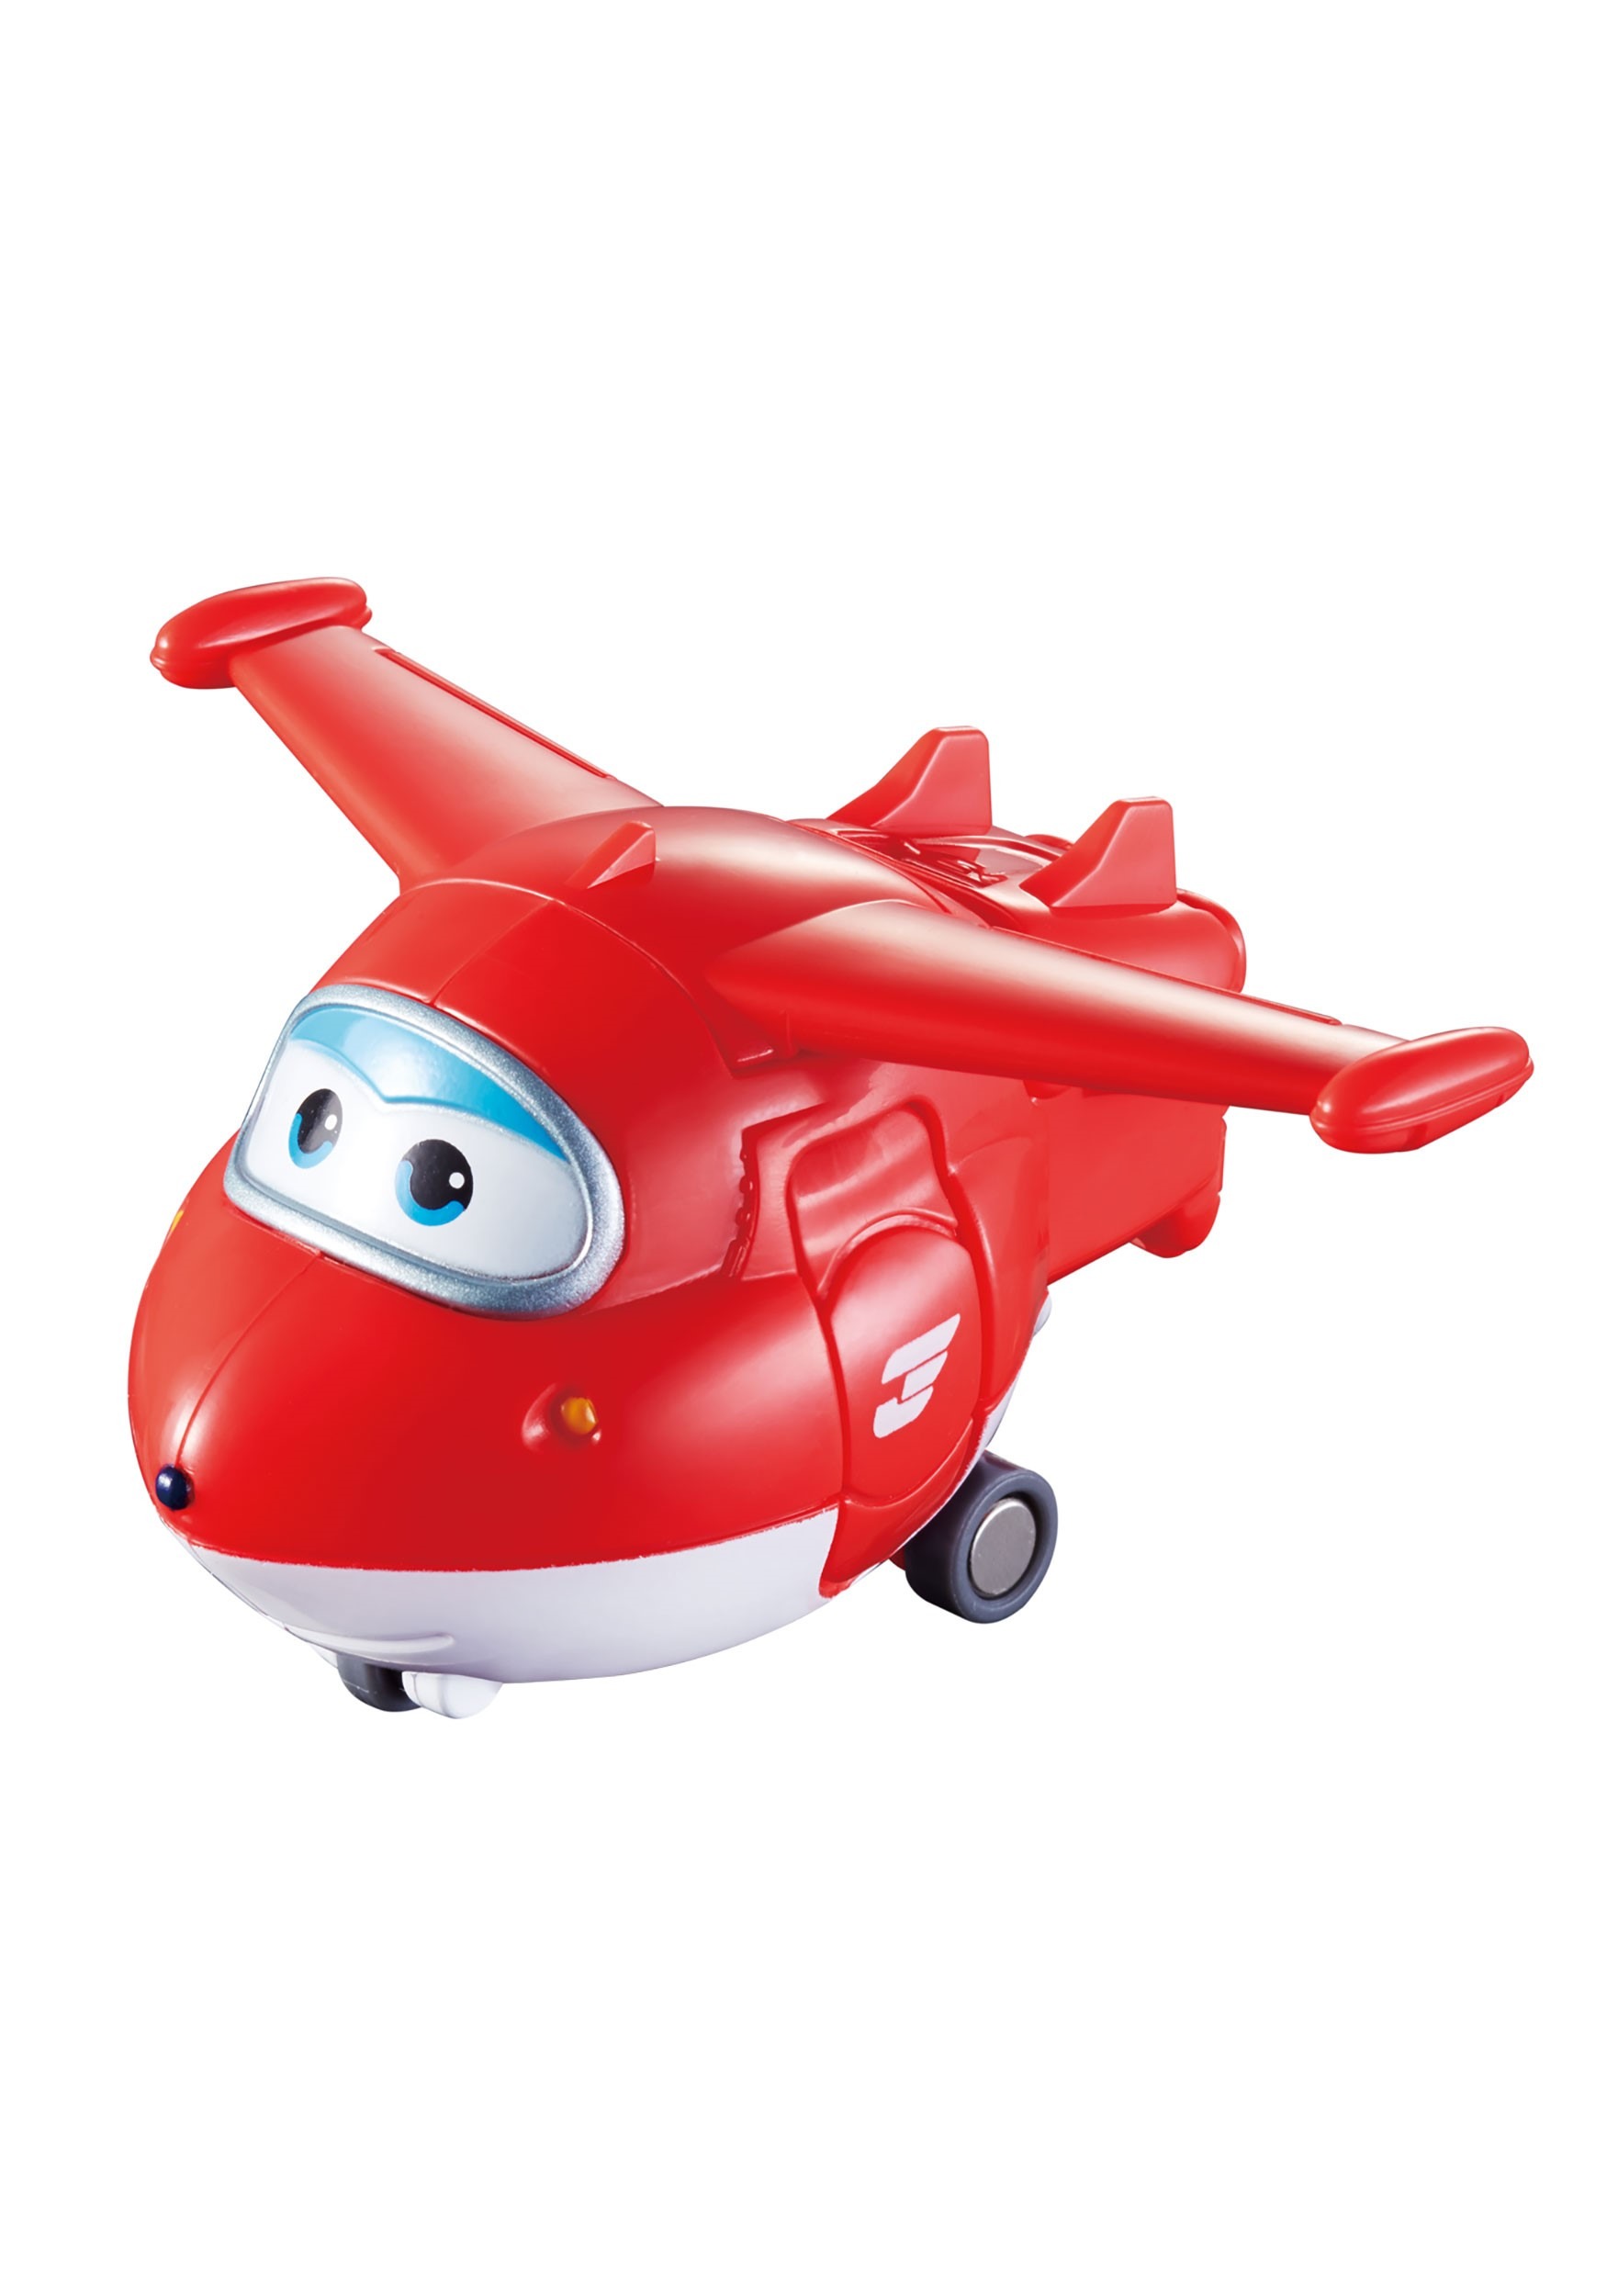 Transform-A-Bots World Airport Crew Super Wings 15 Piece Play Set